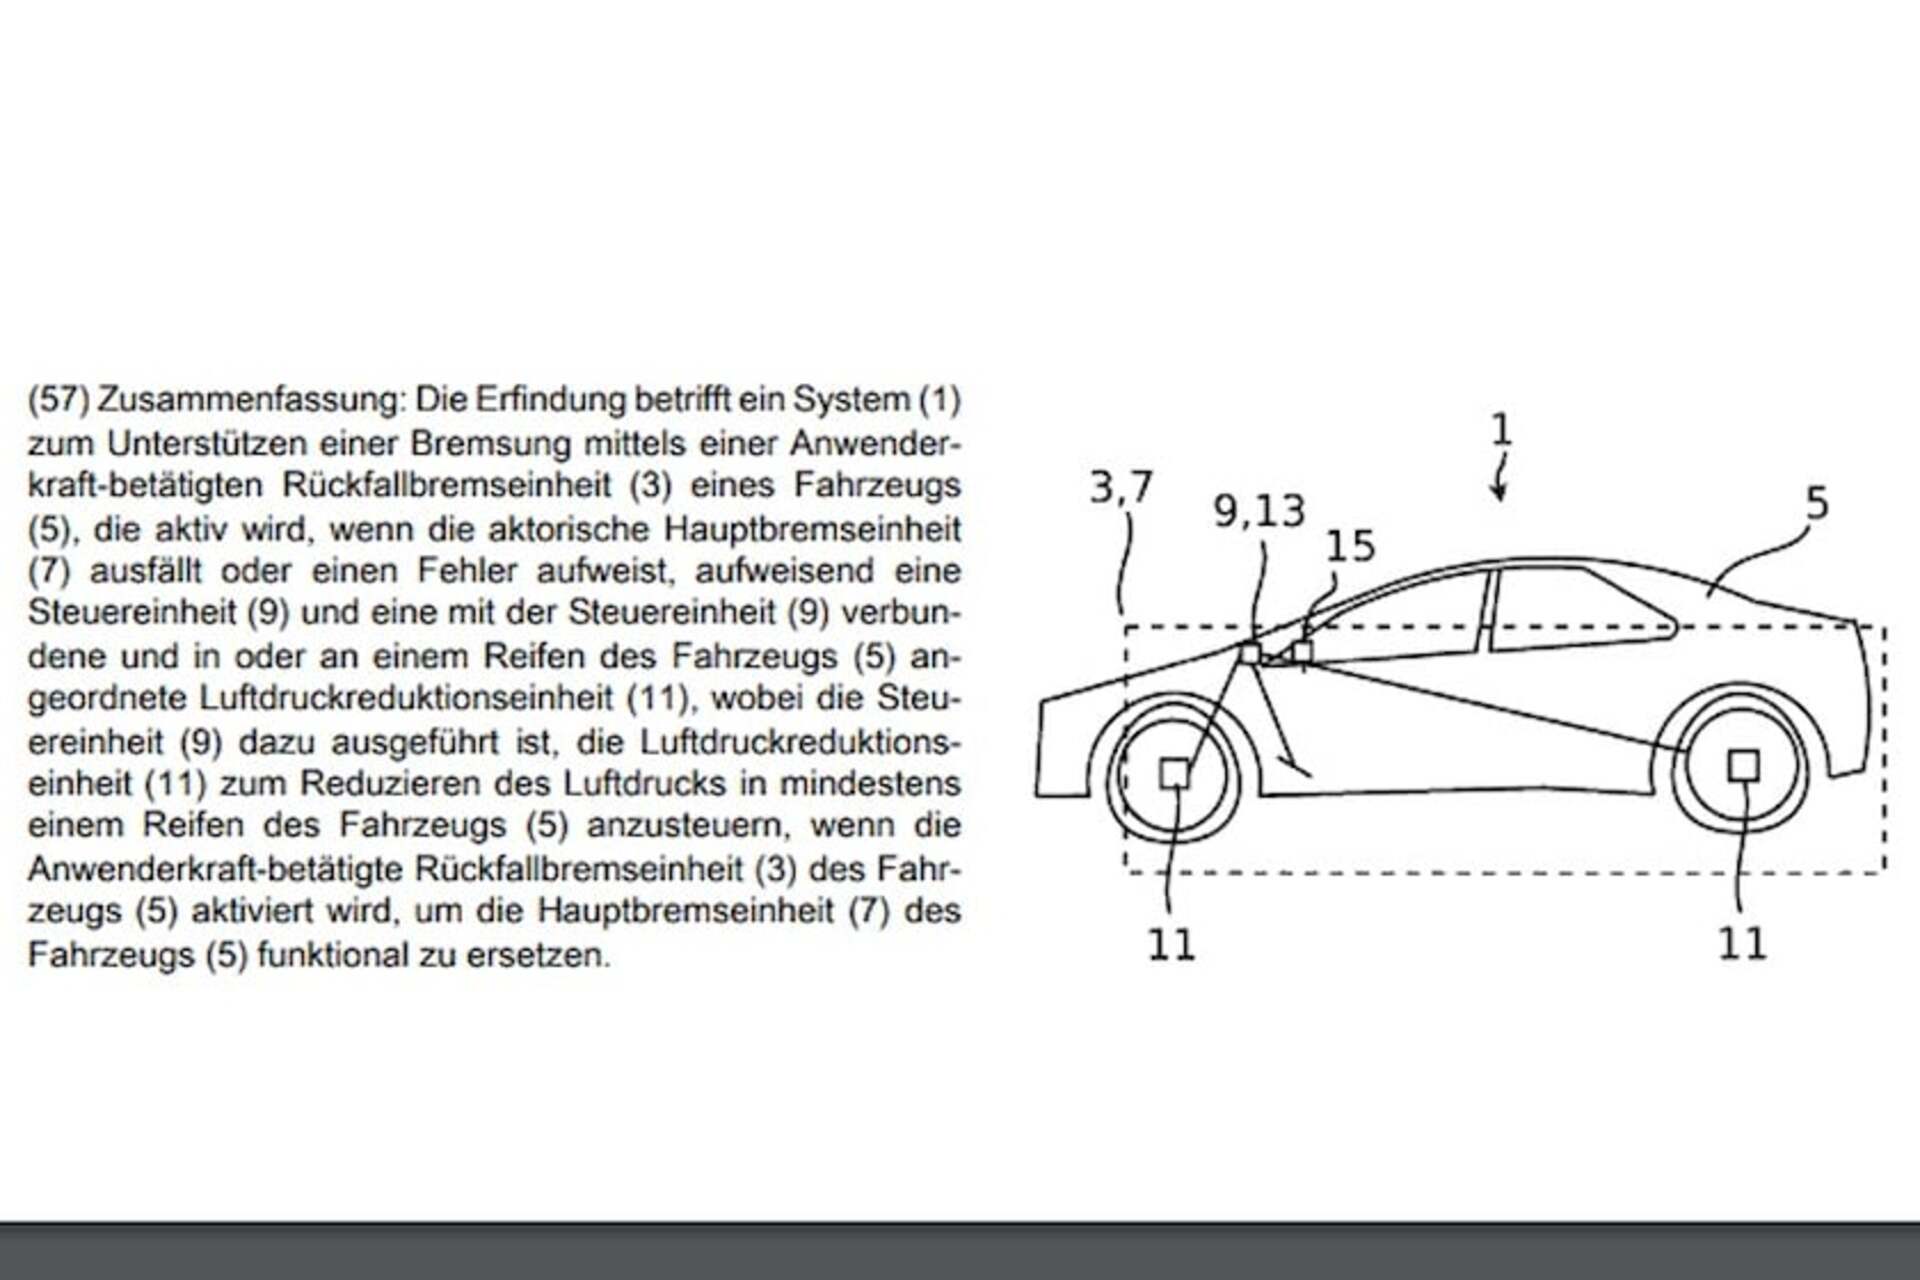 Mercedes Patente2